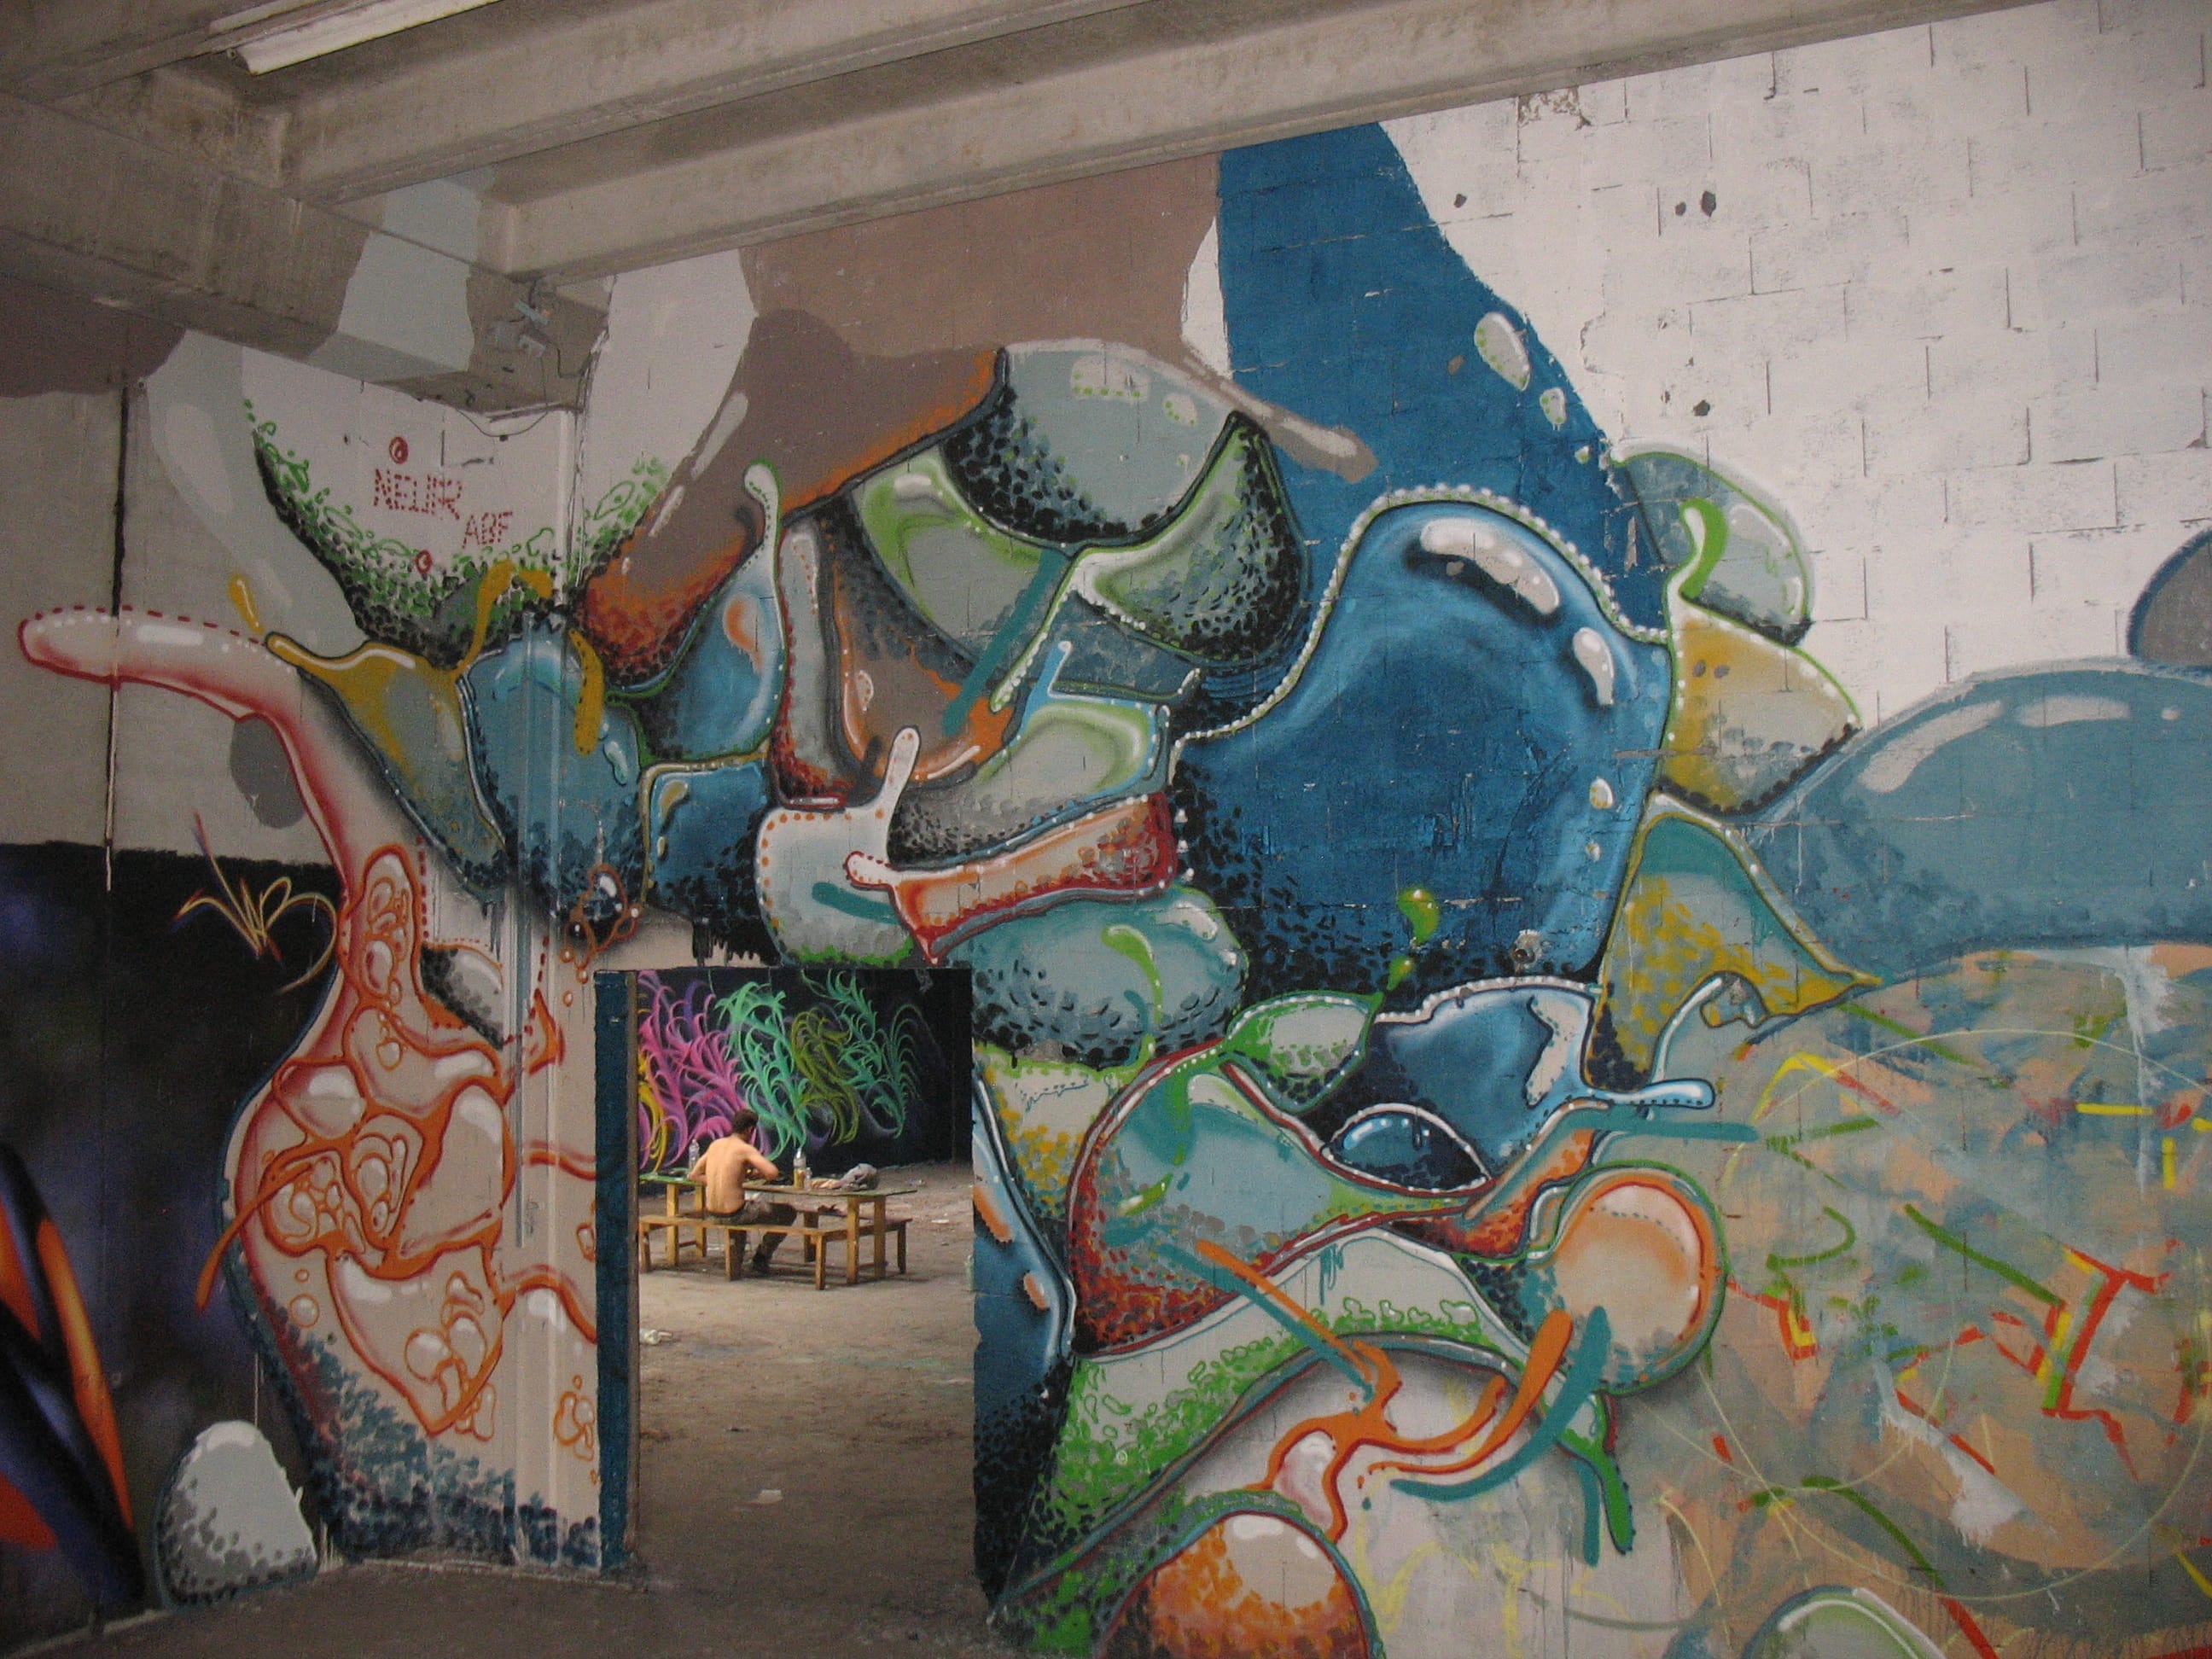 Graffiti 5659 #neurabf capturé par Neur Abf à Trélissac France